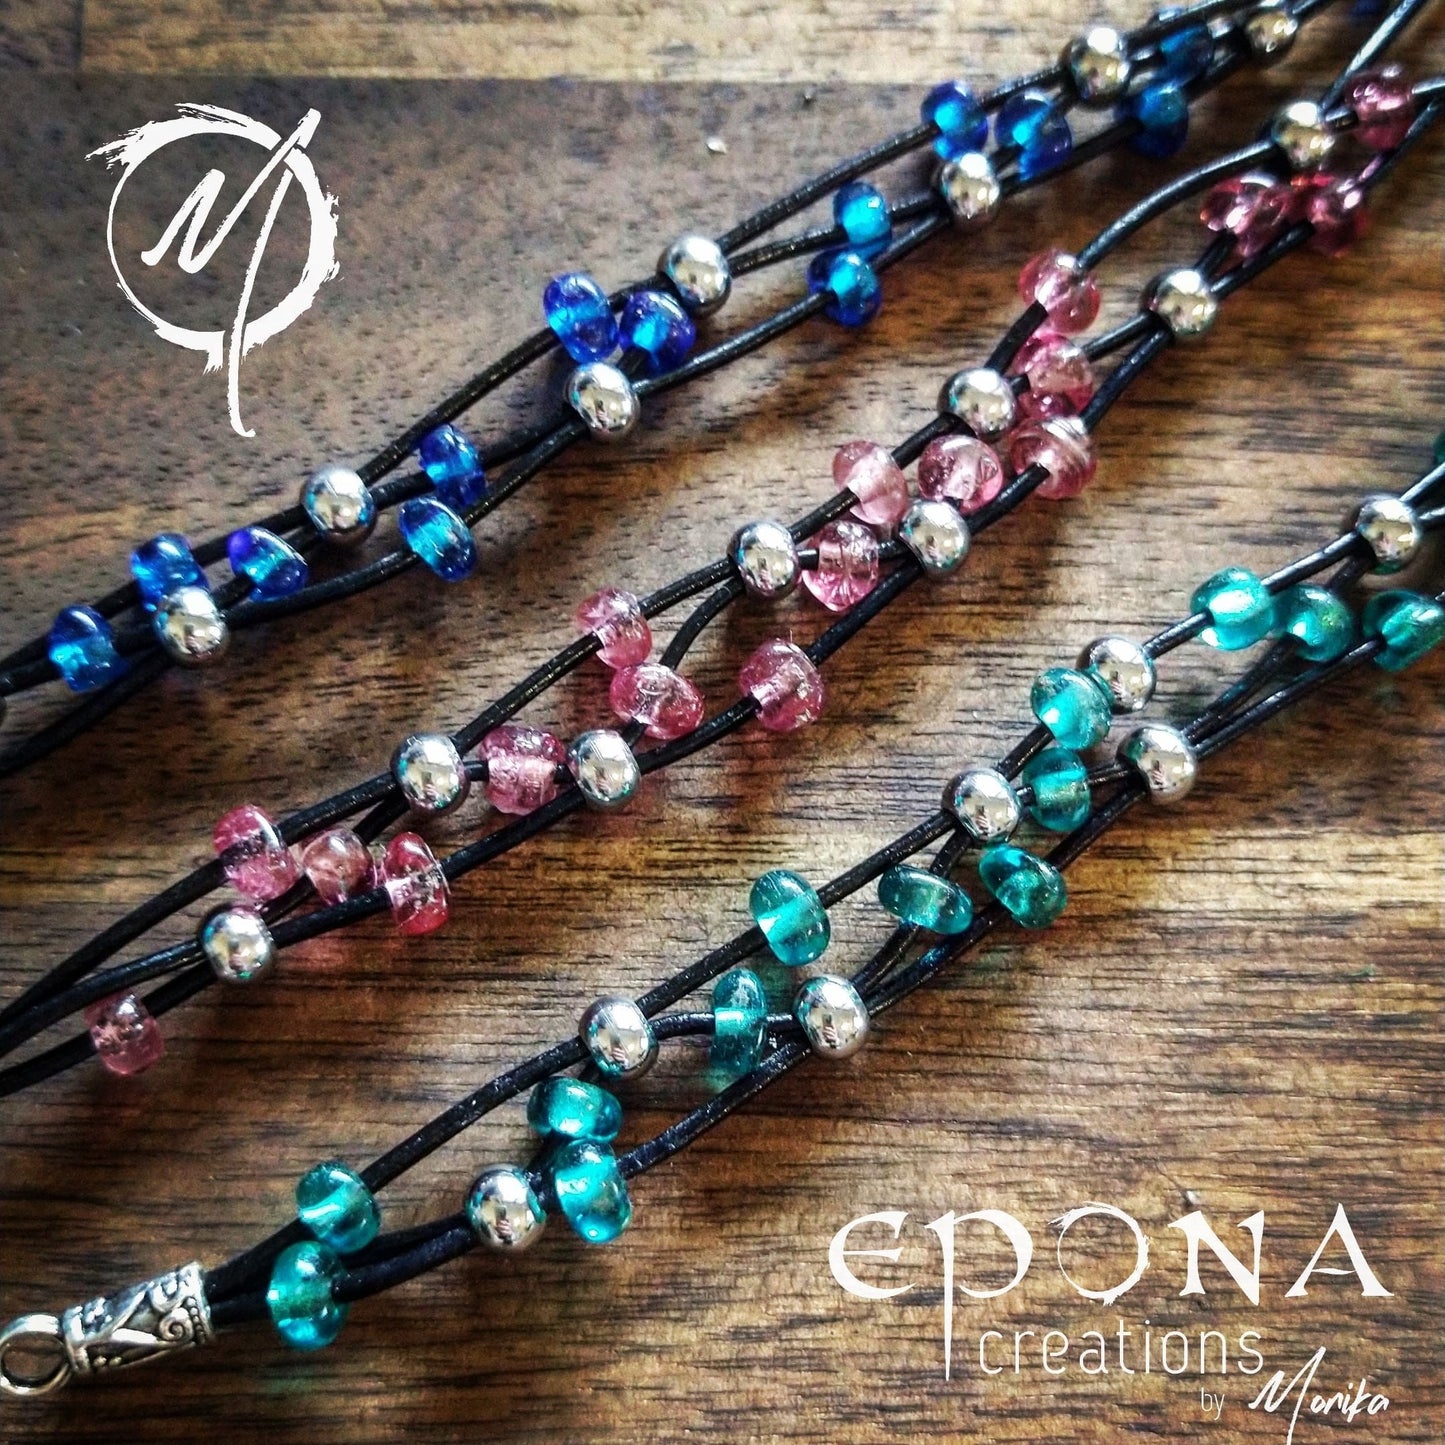 Epona Creations | by Monika - Jewellery and Design Pretty in Pink glass beaded leather bracelet Custom jewellery Monika Australia horsehair keepsake